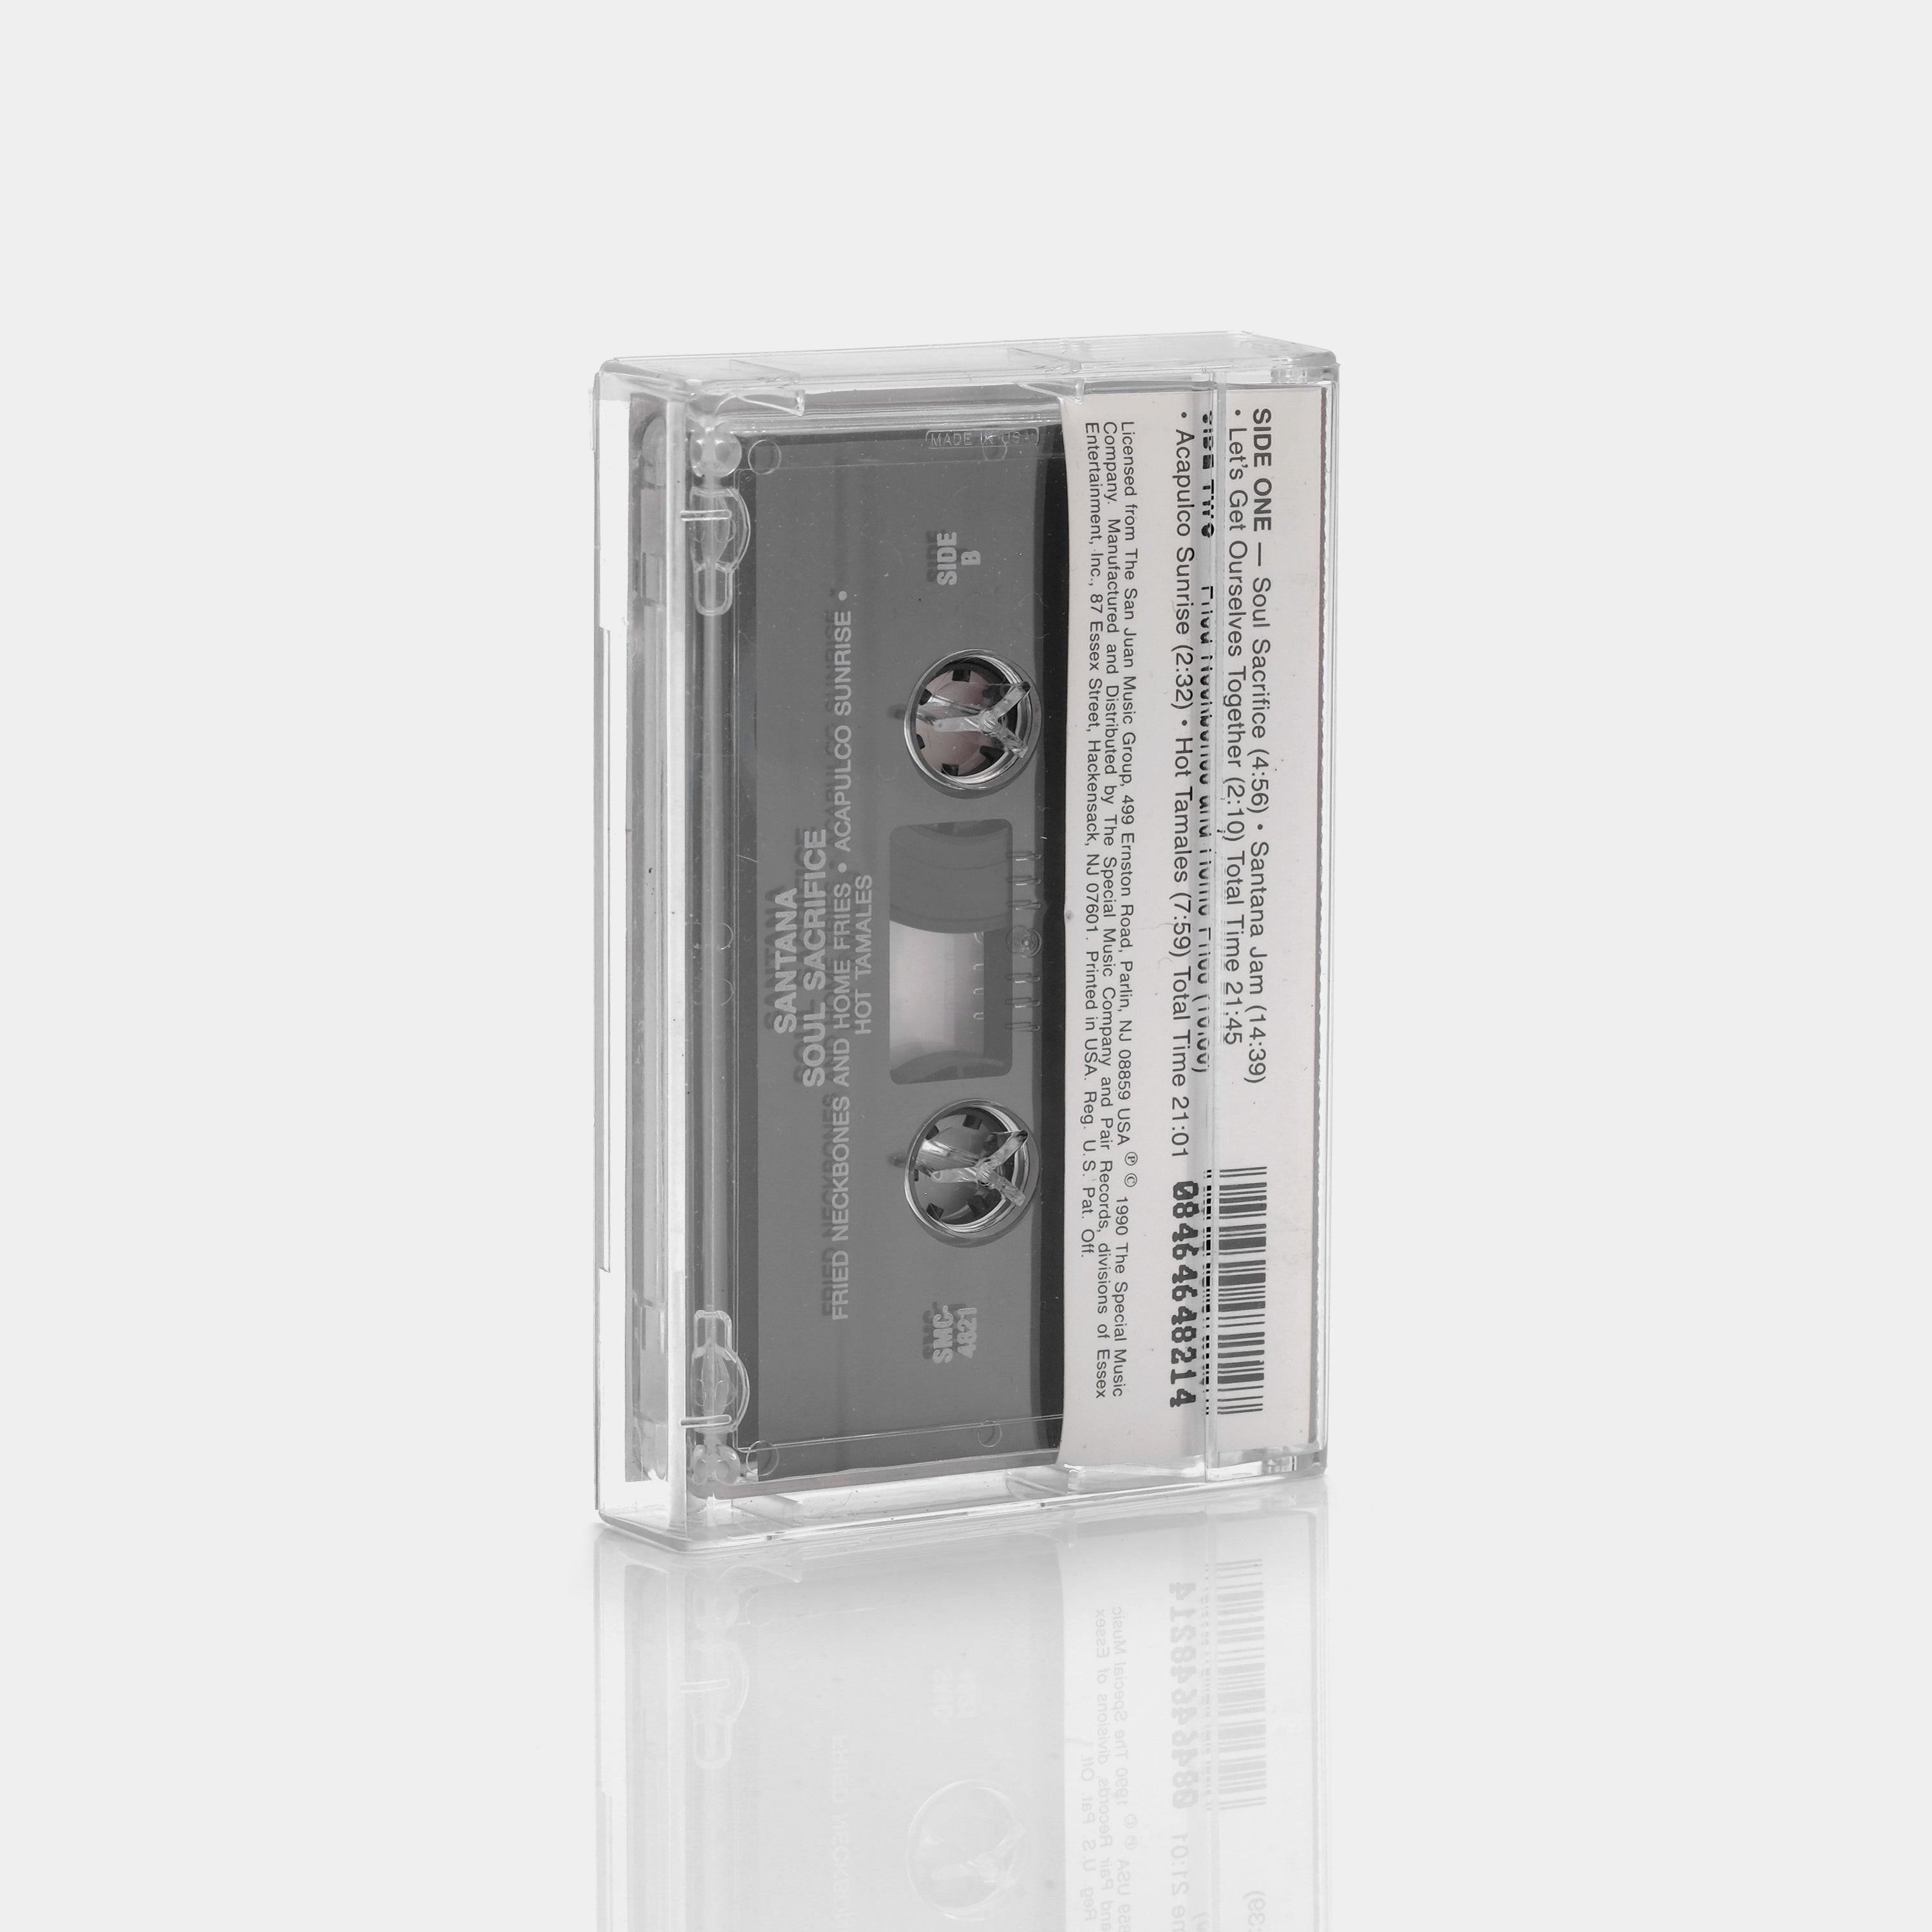 Santana - Soul Sacrifice Cassette Tape